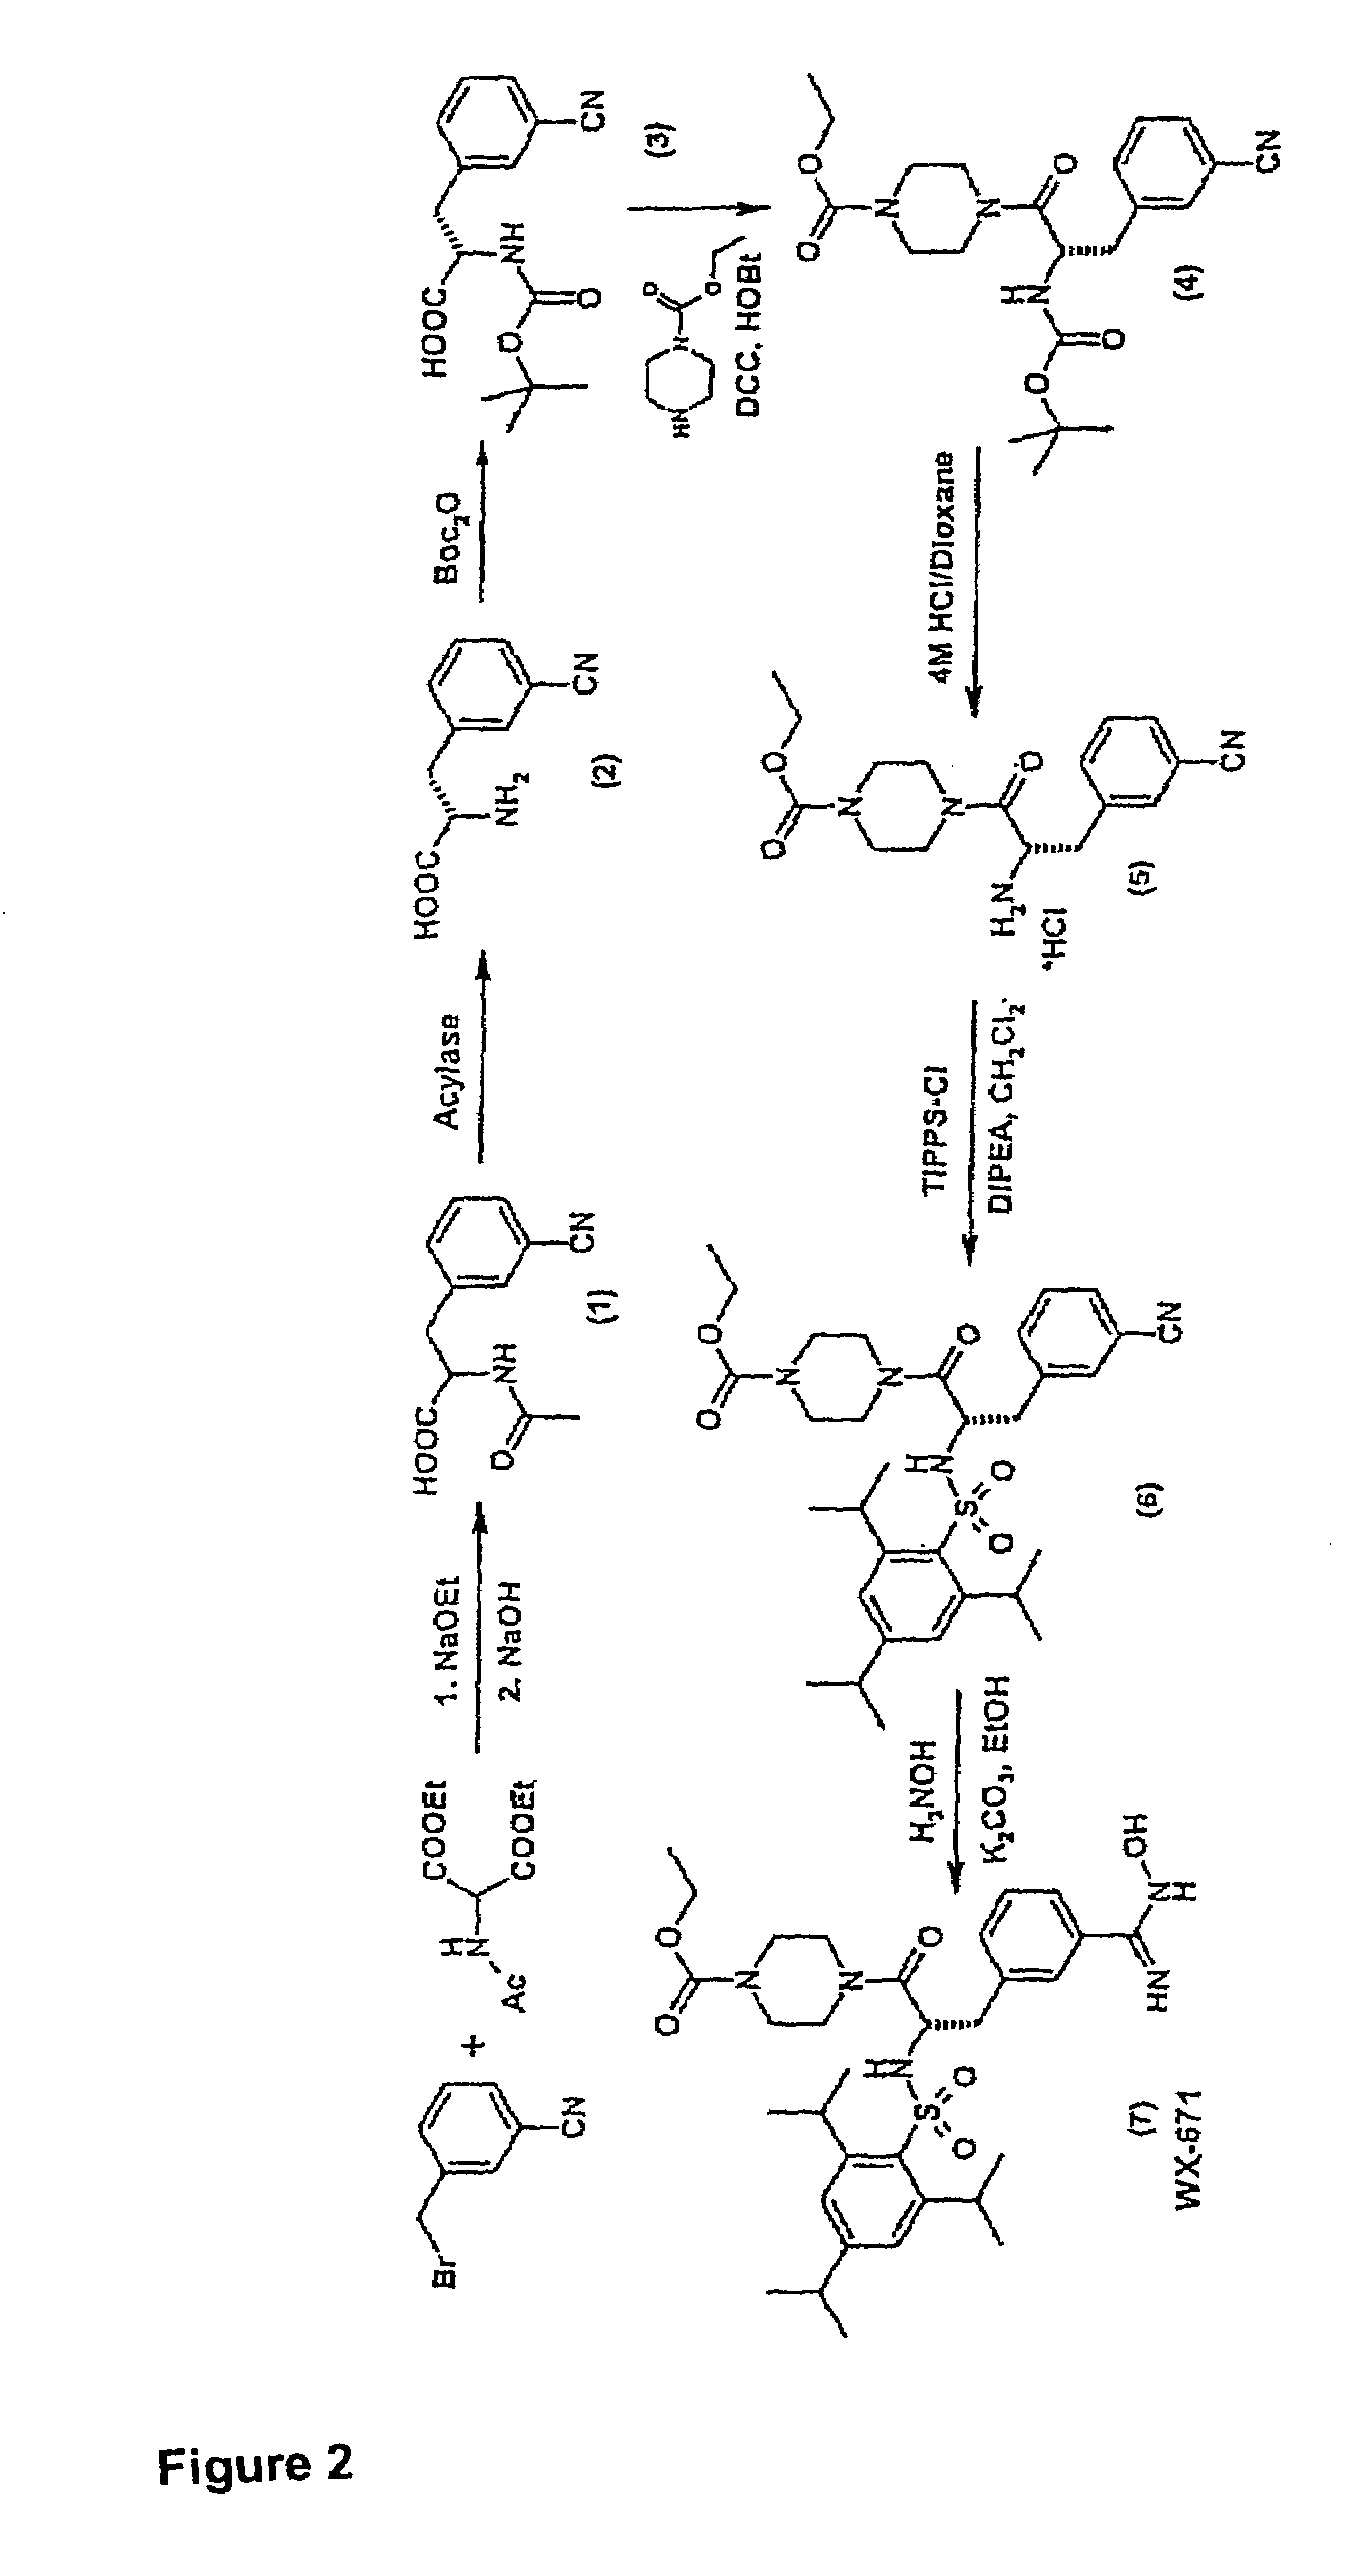 Hydroxyamidine and hydroxyguanidine compounds as urokinase inhibitors